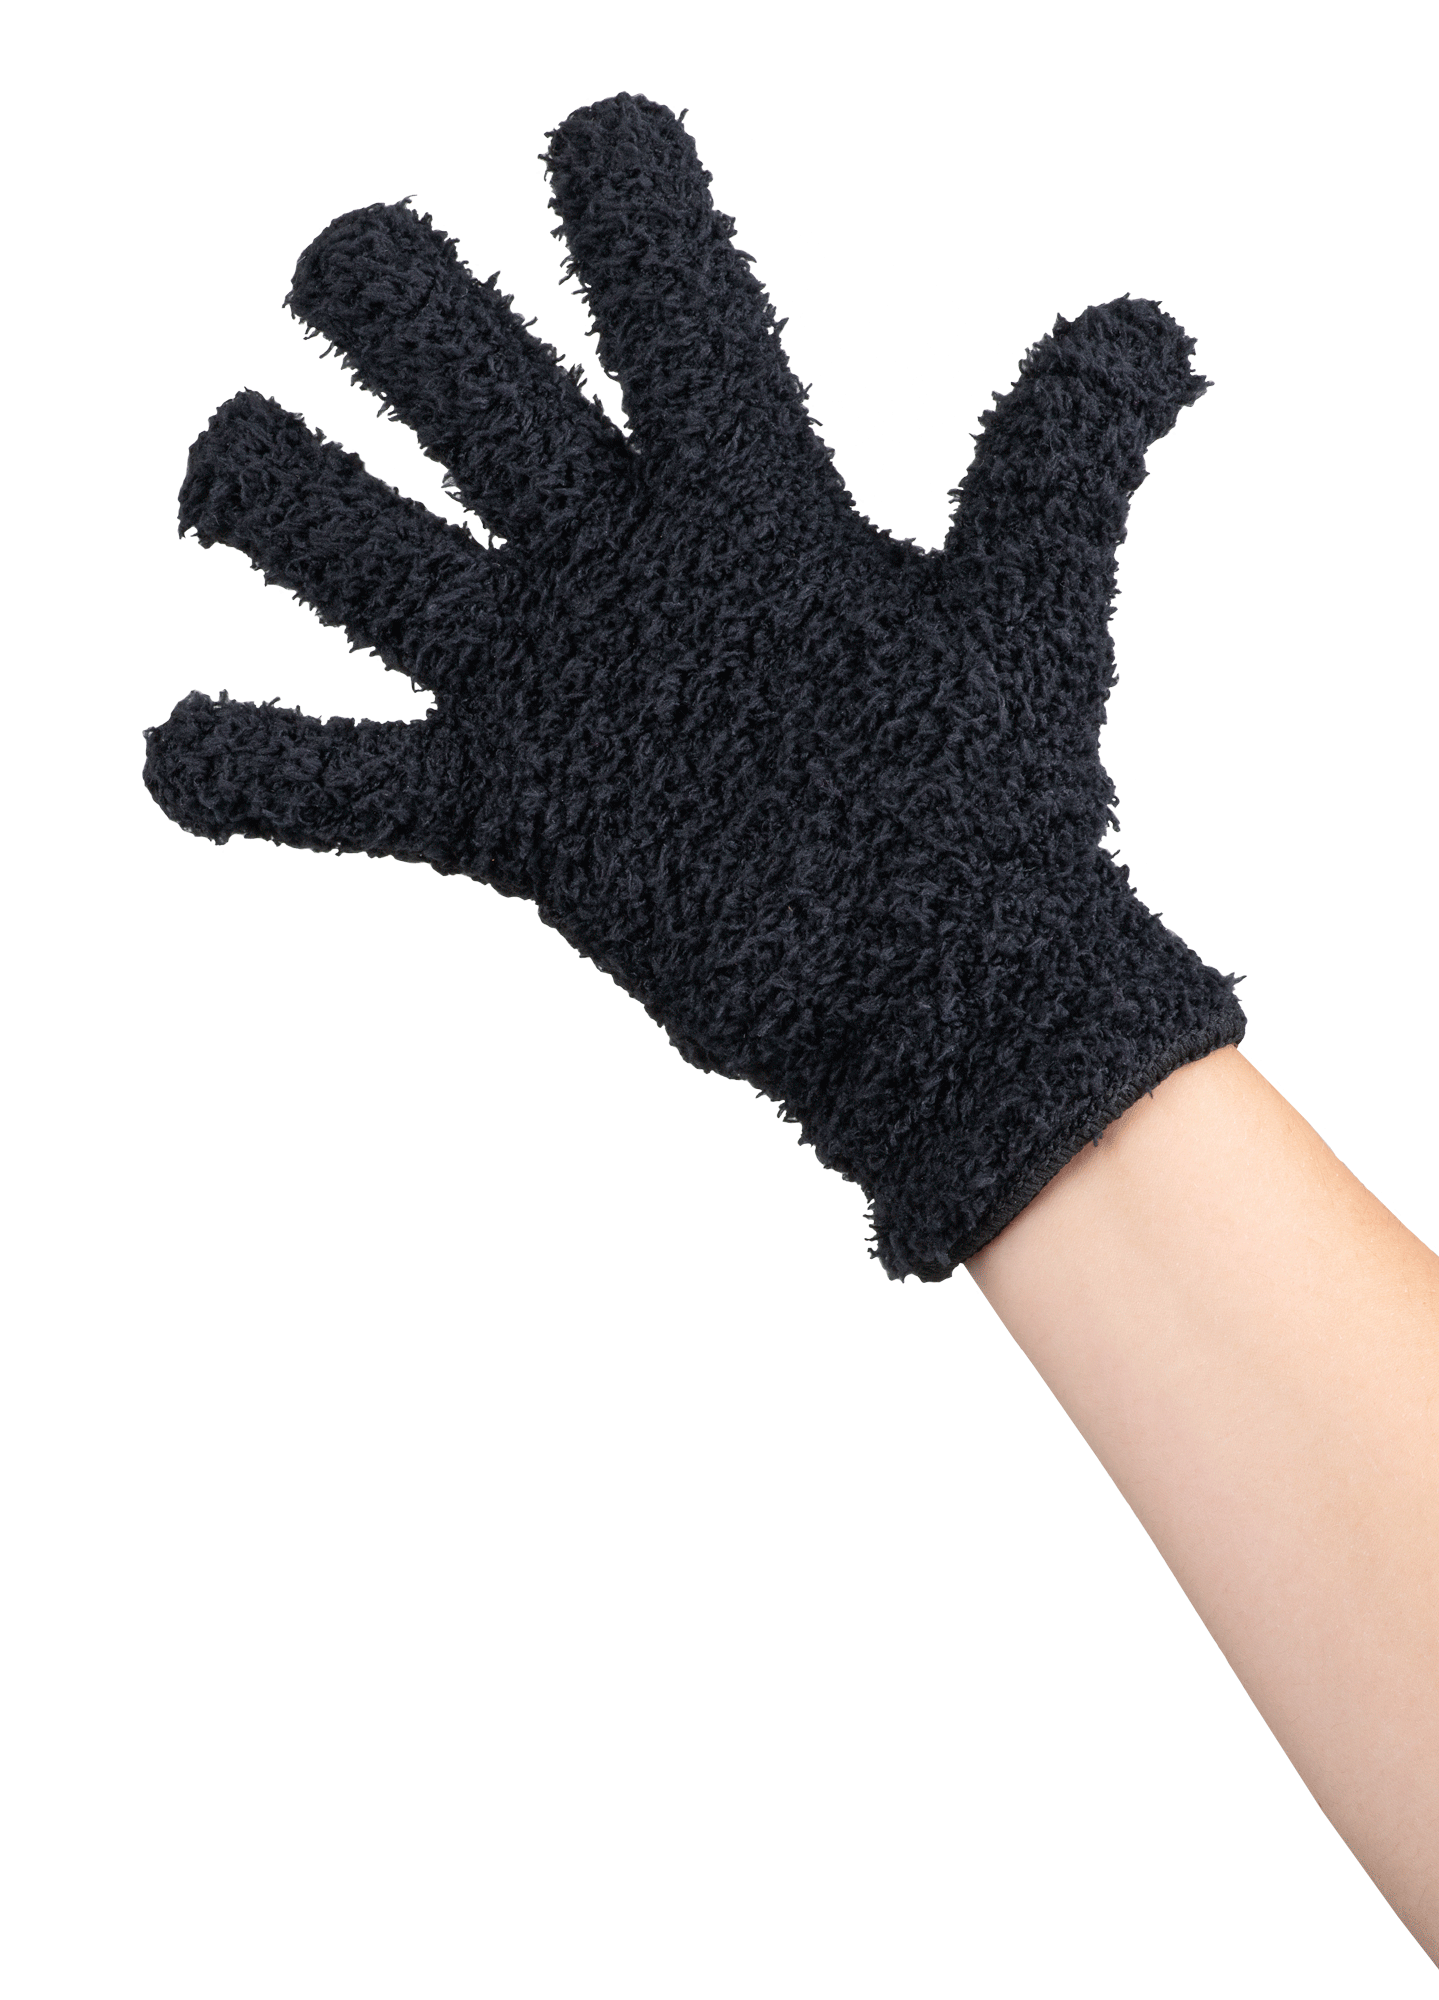 Framar Gloves - Bleach Blenders - Creata Beauty - Professional Beauty Products